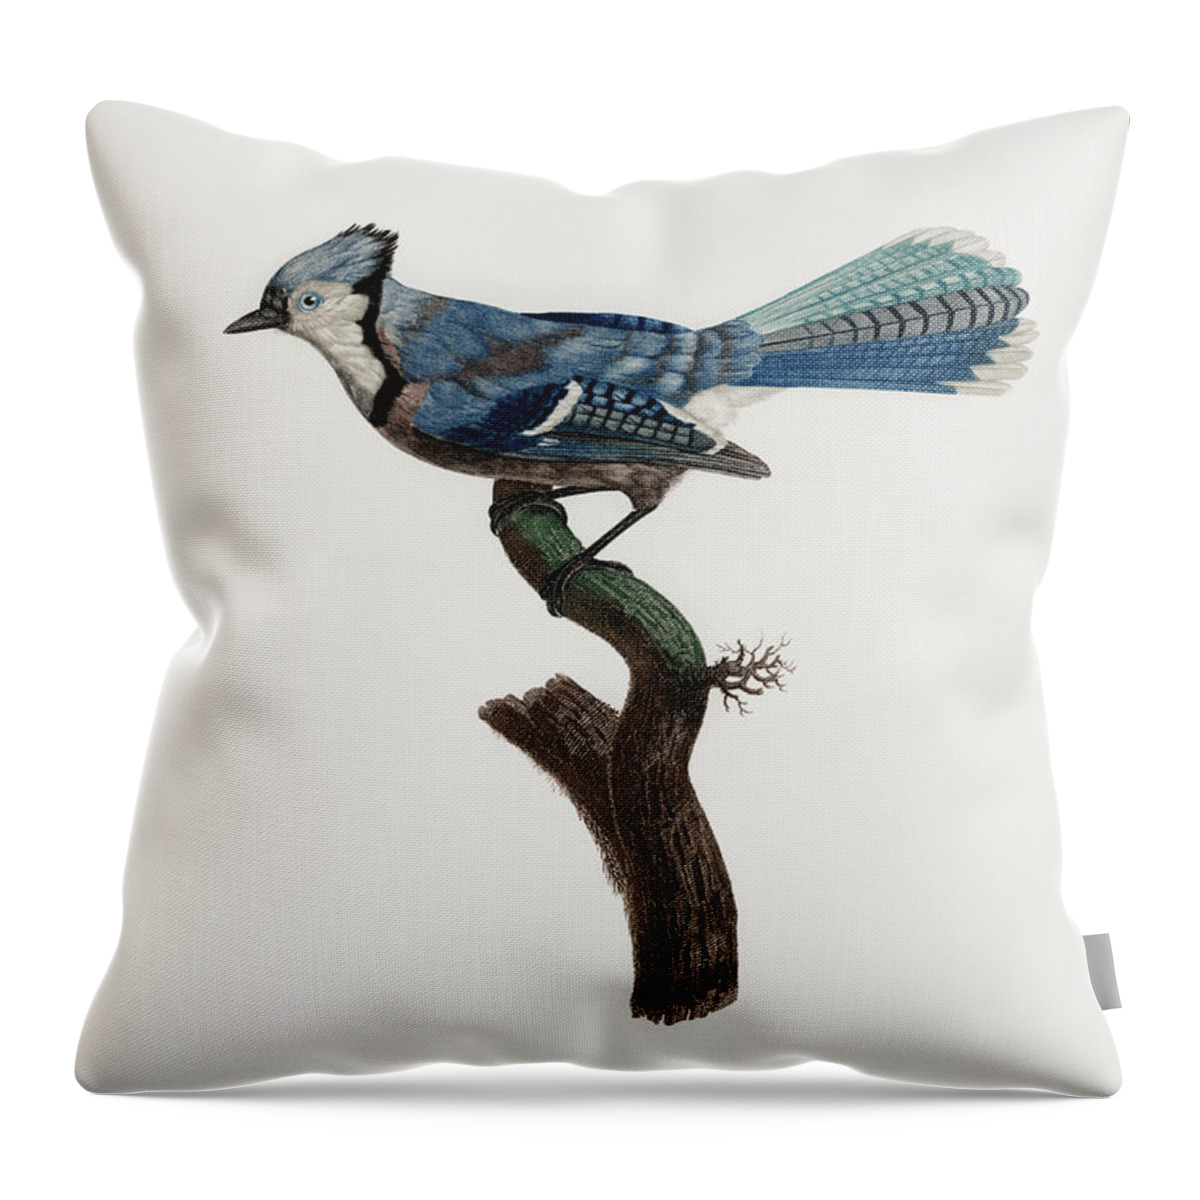 Jacques Barraband Throw Pillow featuring the digital art Blue Green Jay - - Vintage Bird Illustration - Birds Of Paradise - Jacques Barraband - Ornithology by Studio Grafiikka